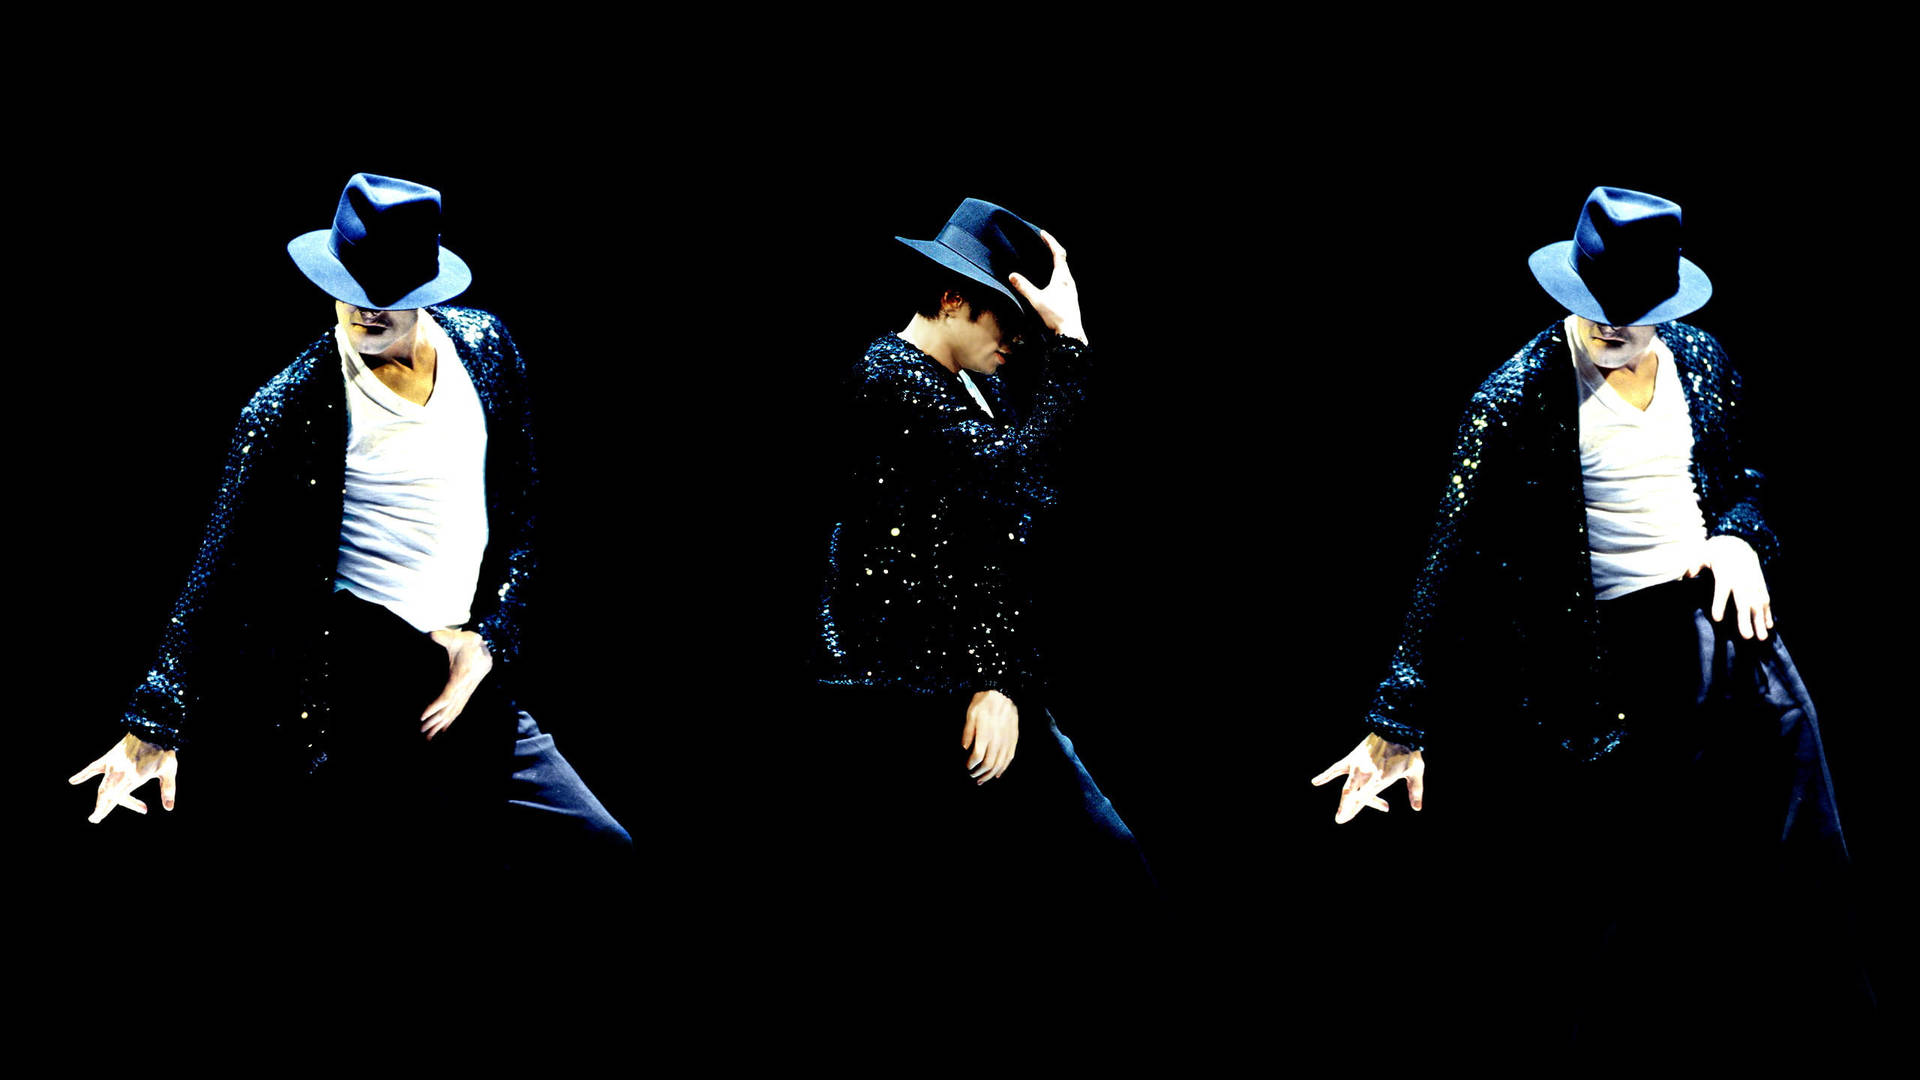 Michael Jackson Dance Moves Background